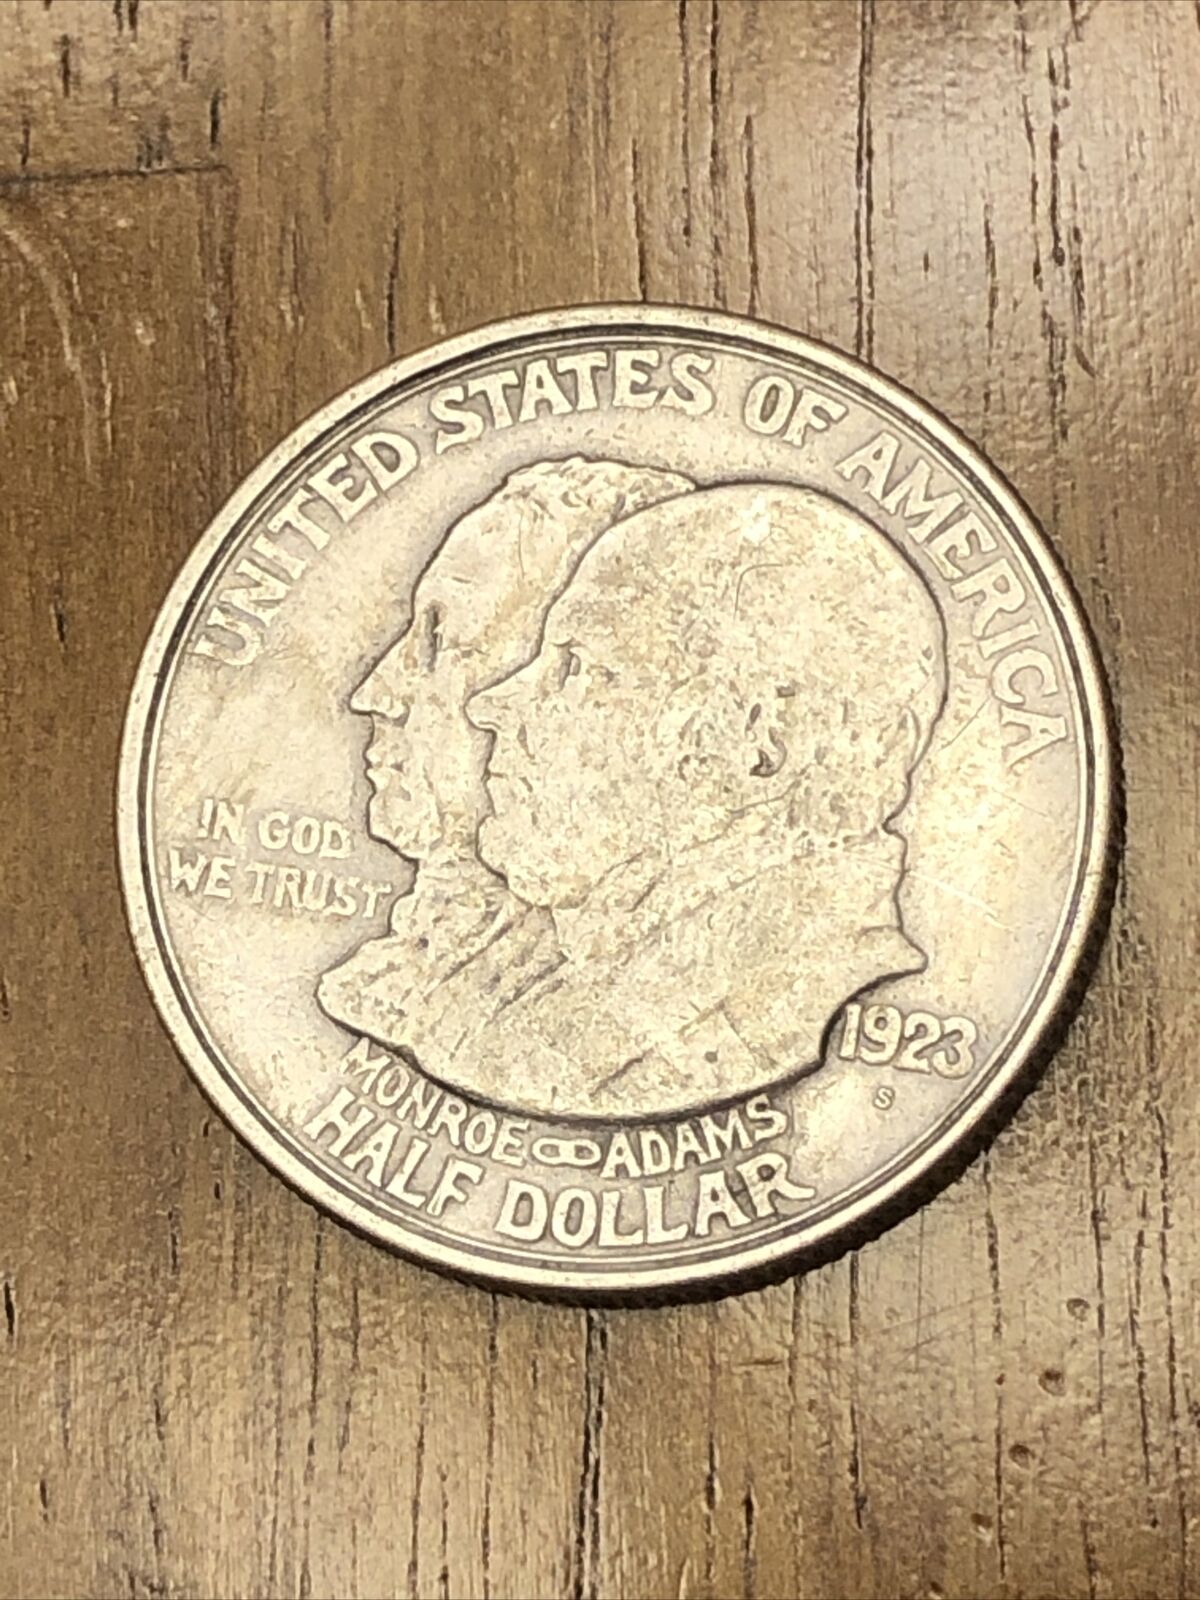 1923-S Monroe Doctrine Commemorative Silver Half Dollar